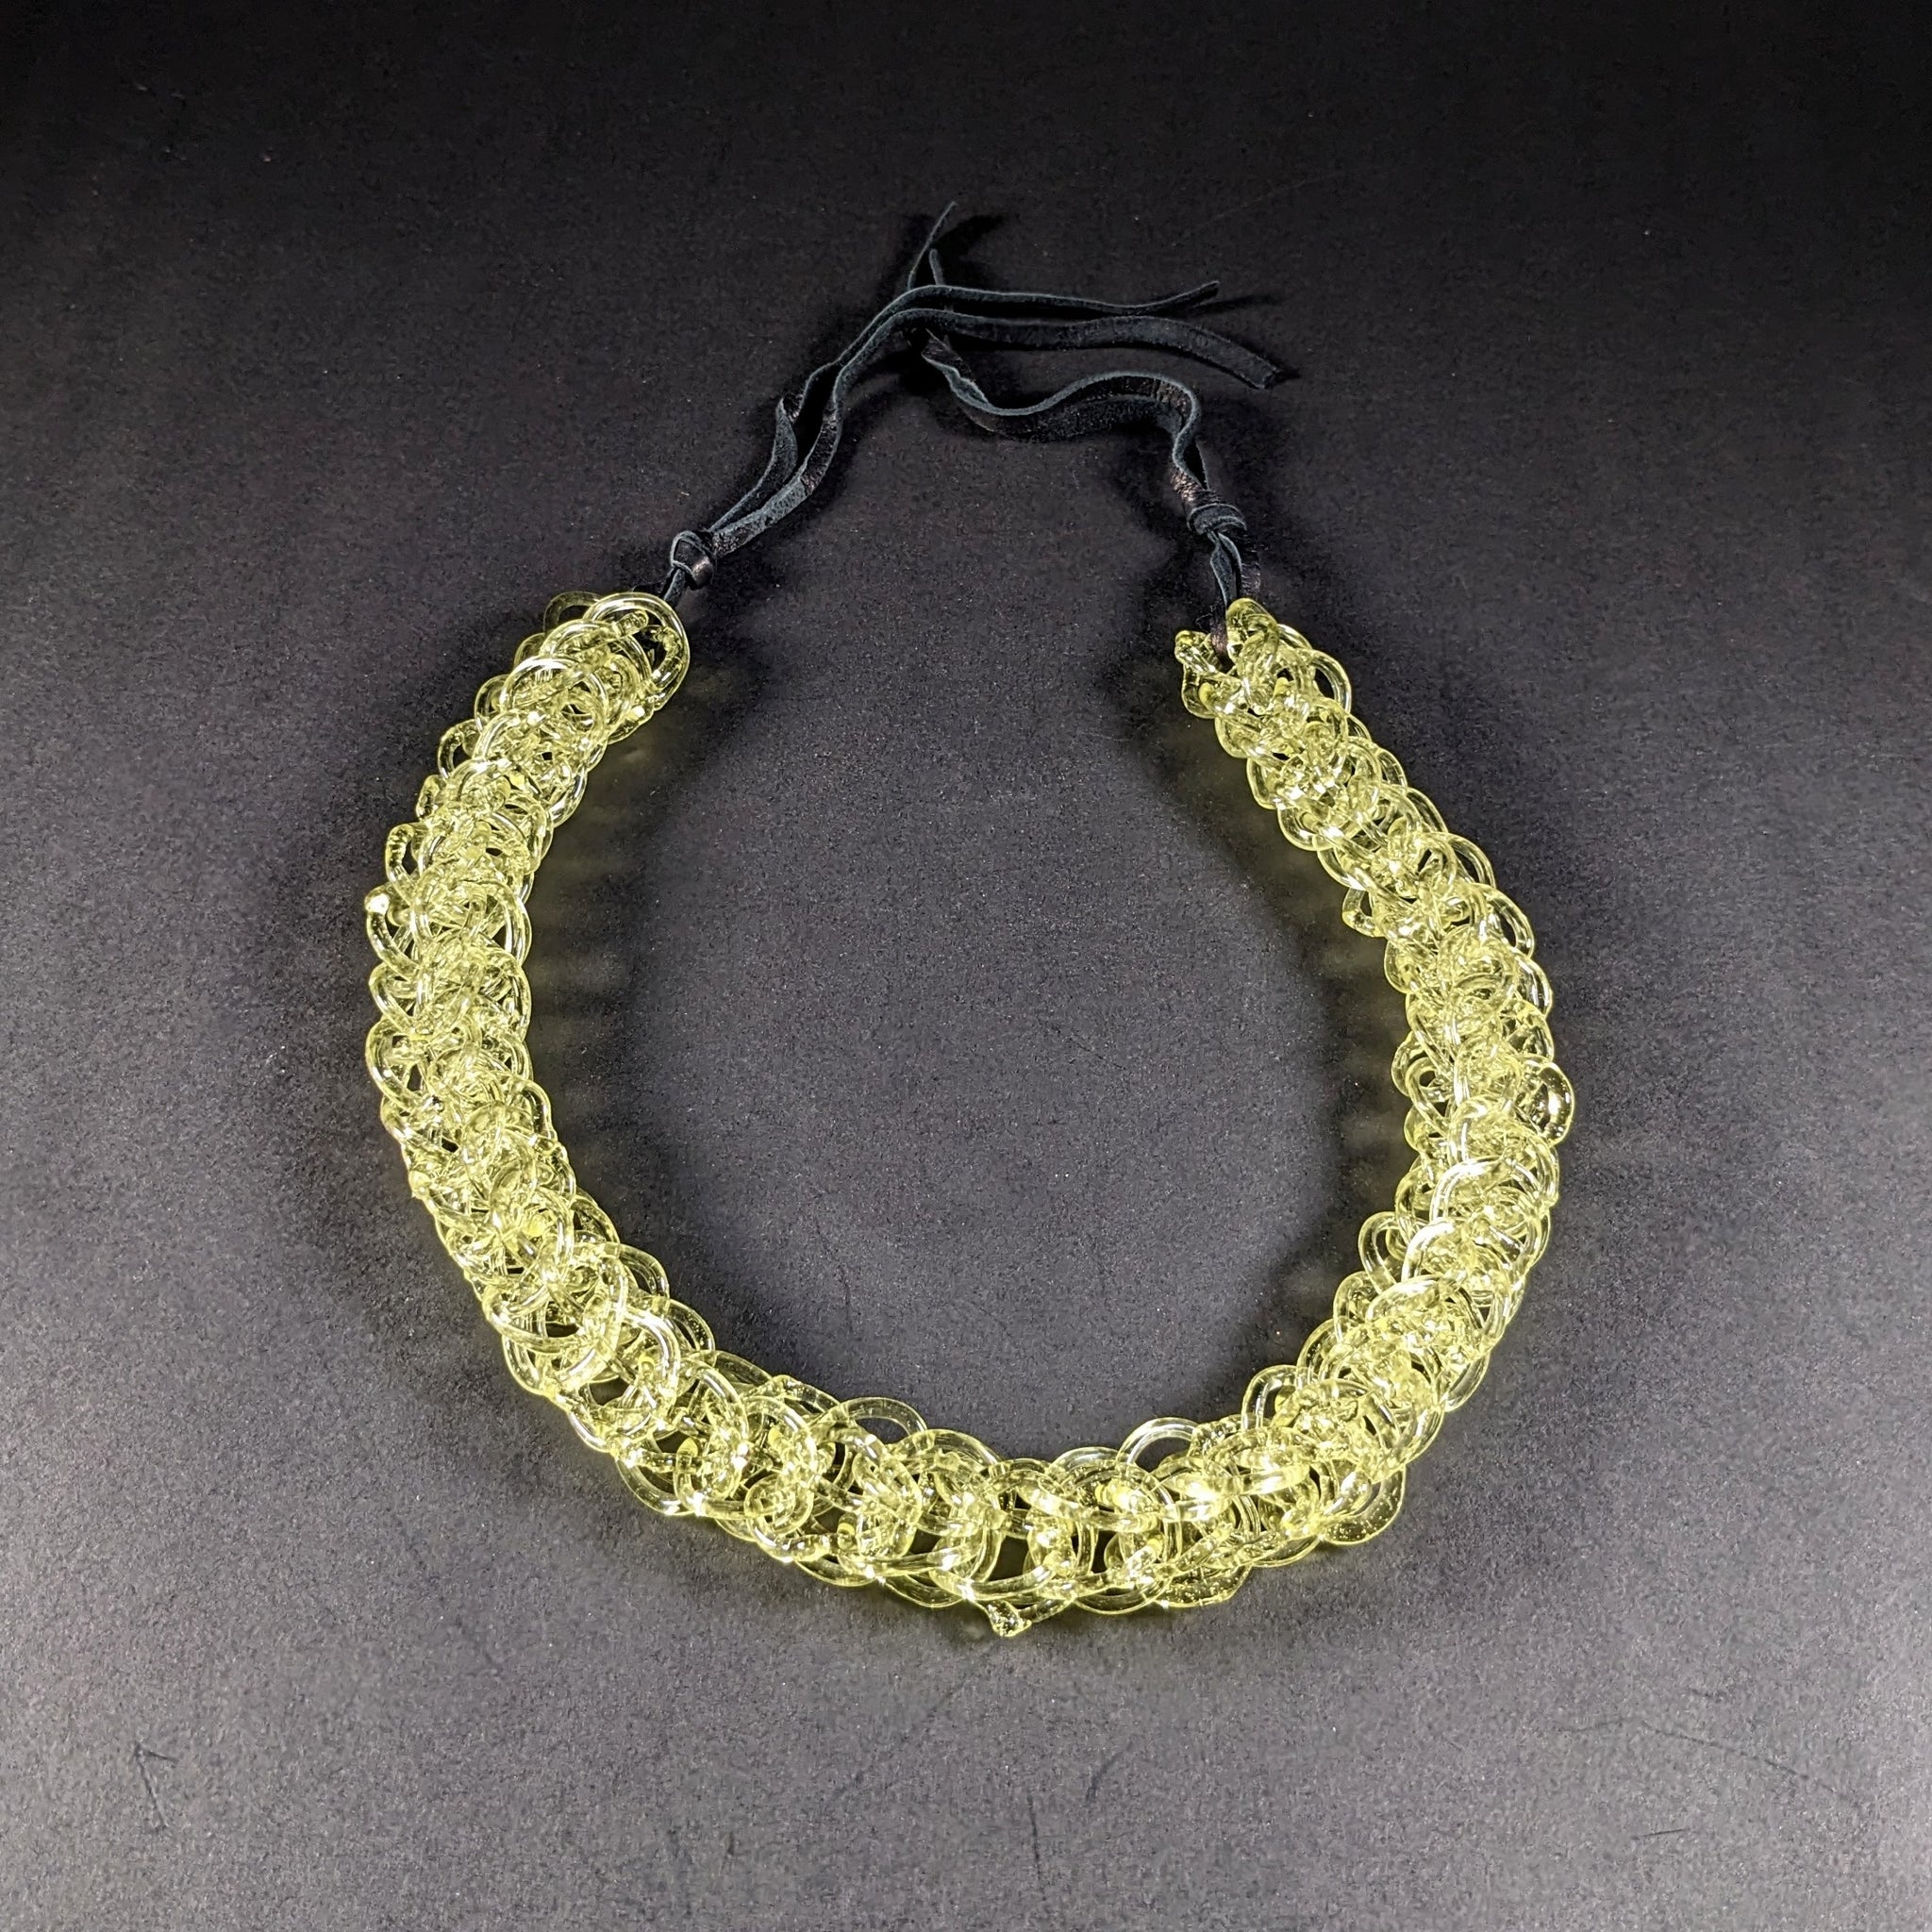 ChainSmokerGlass - Serum (CFL) Double Persian Glass Chain with Ties